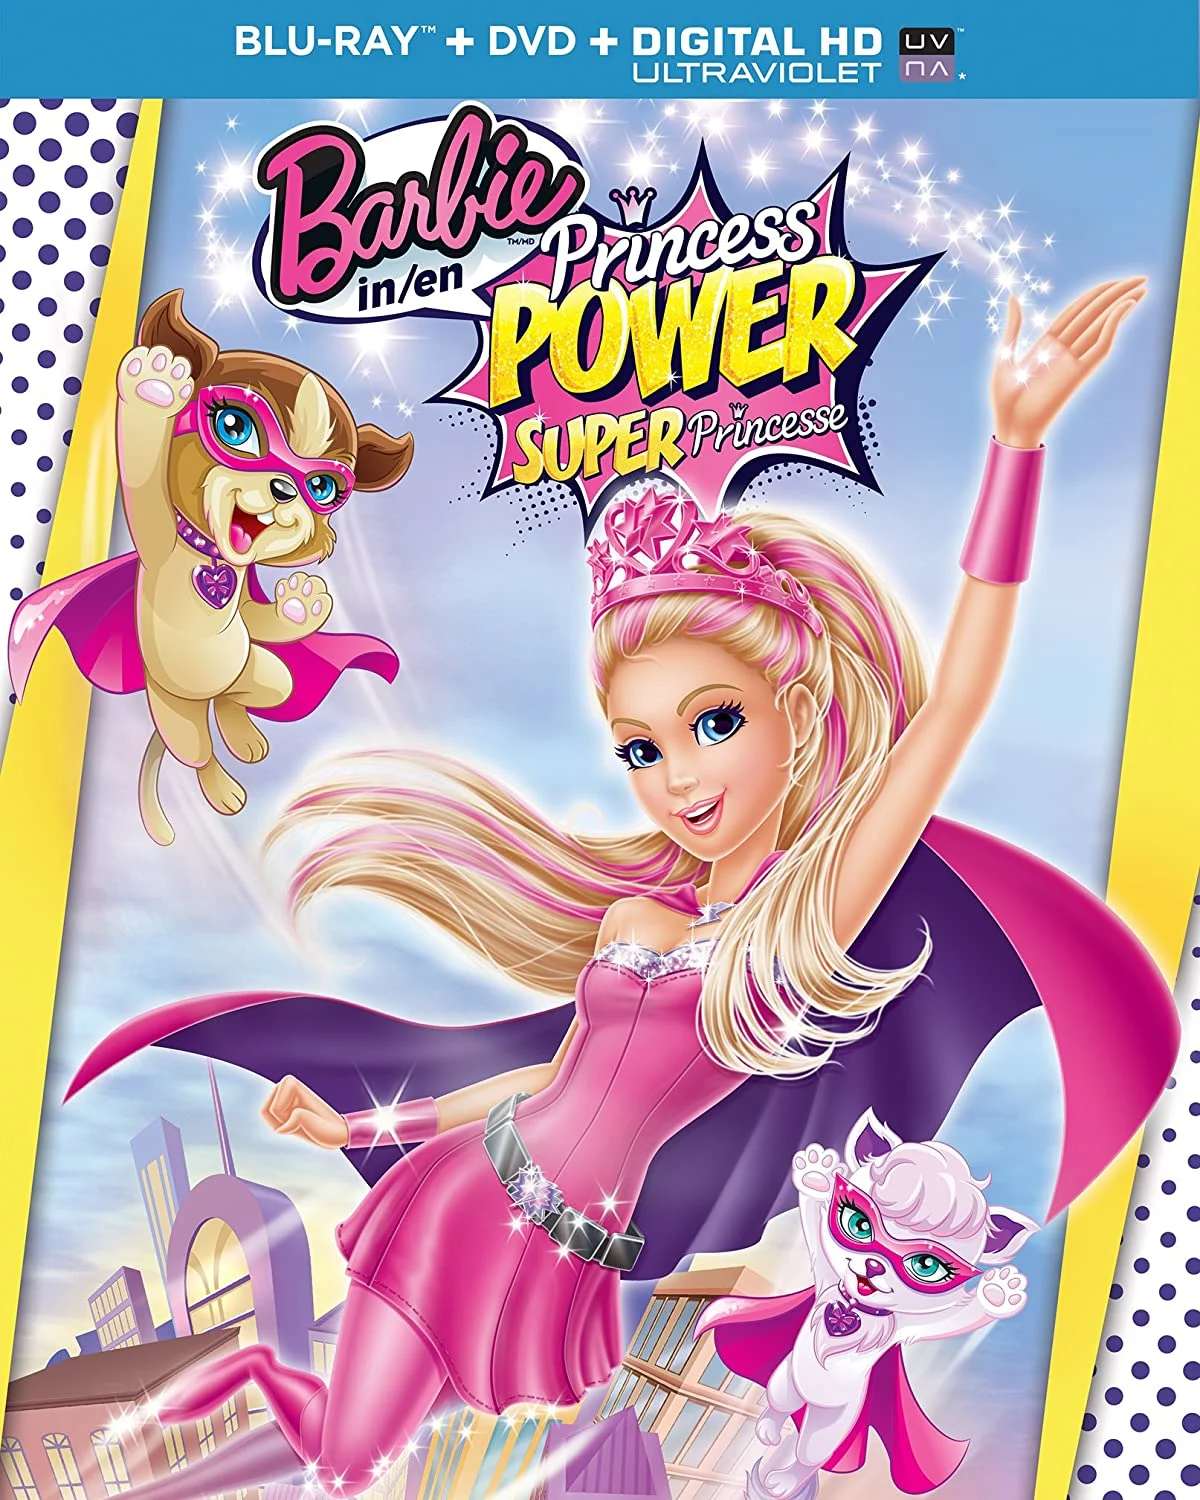 Barbie: In Princess Power (Blu-ray/DVD Combo) on MovieShack